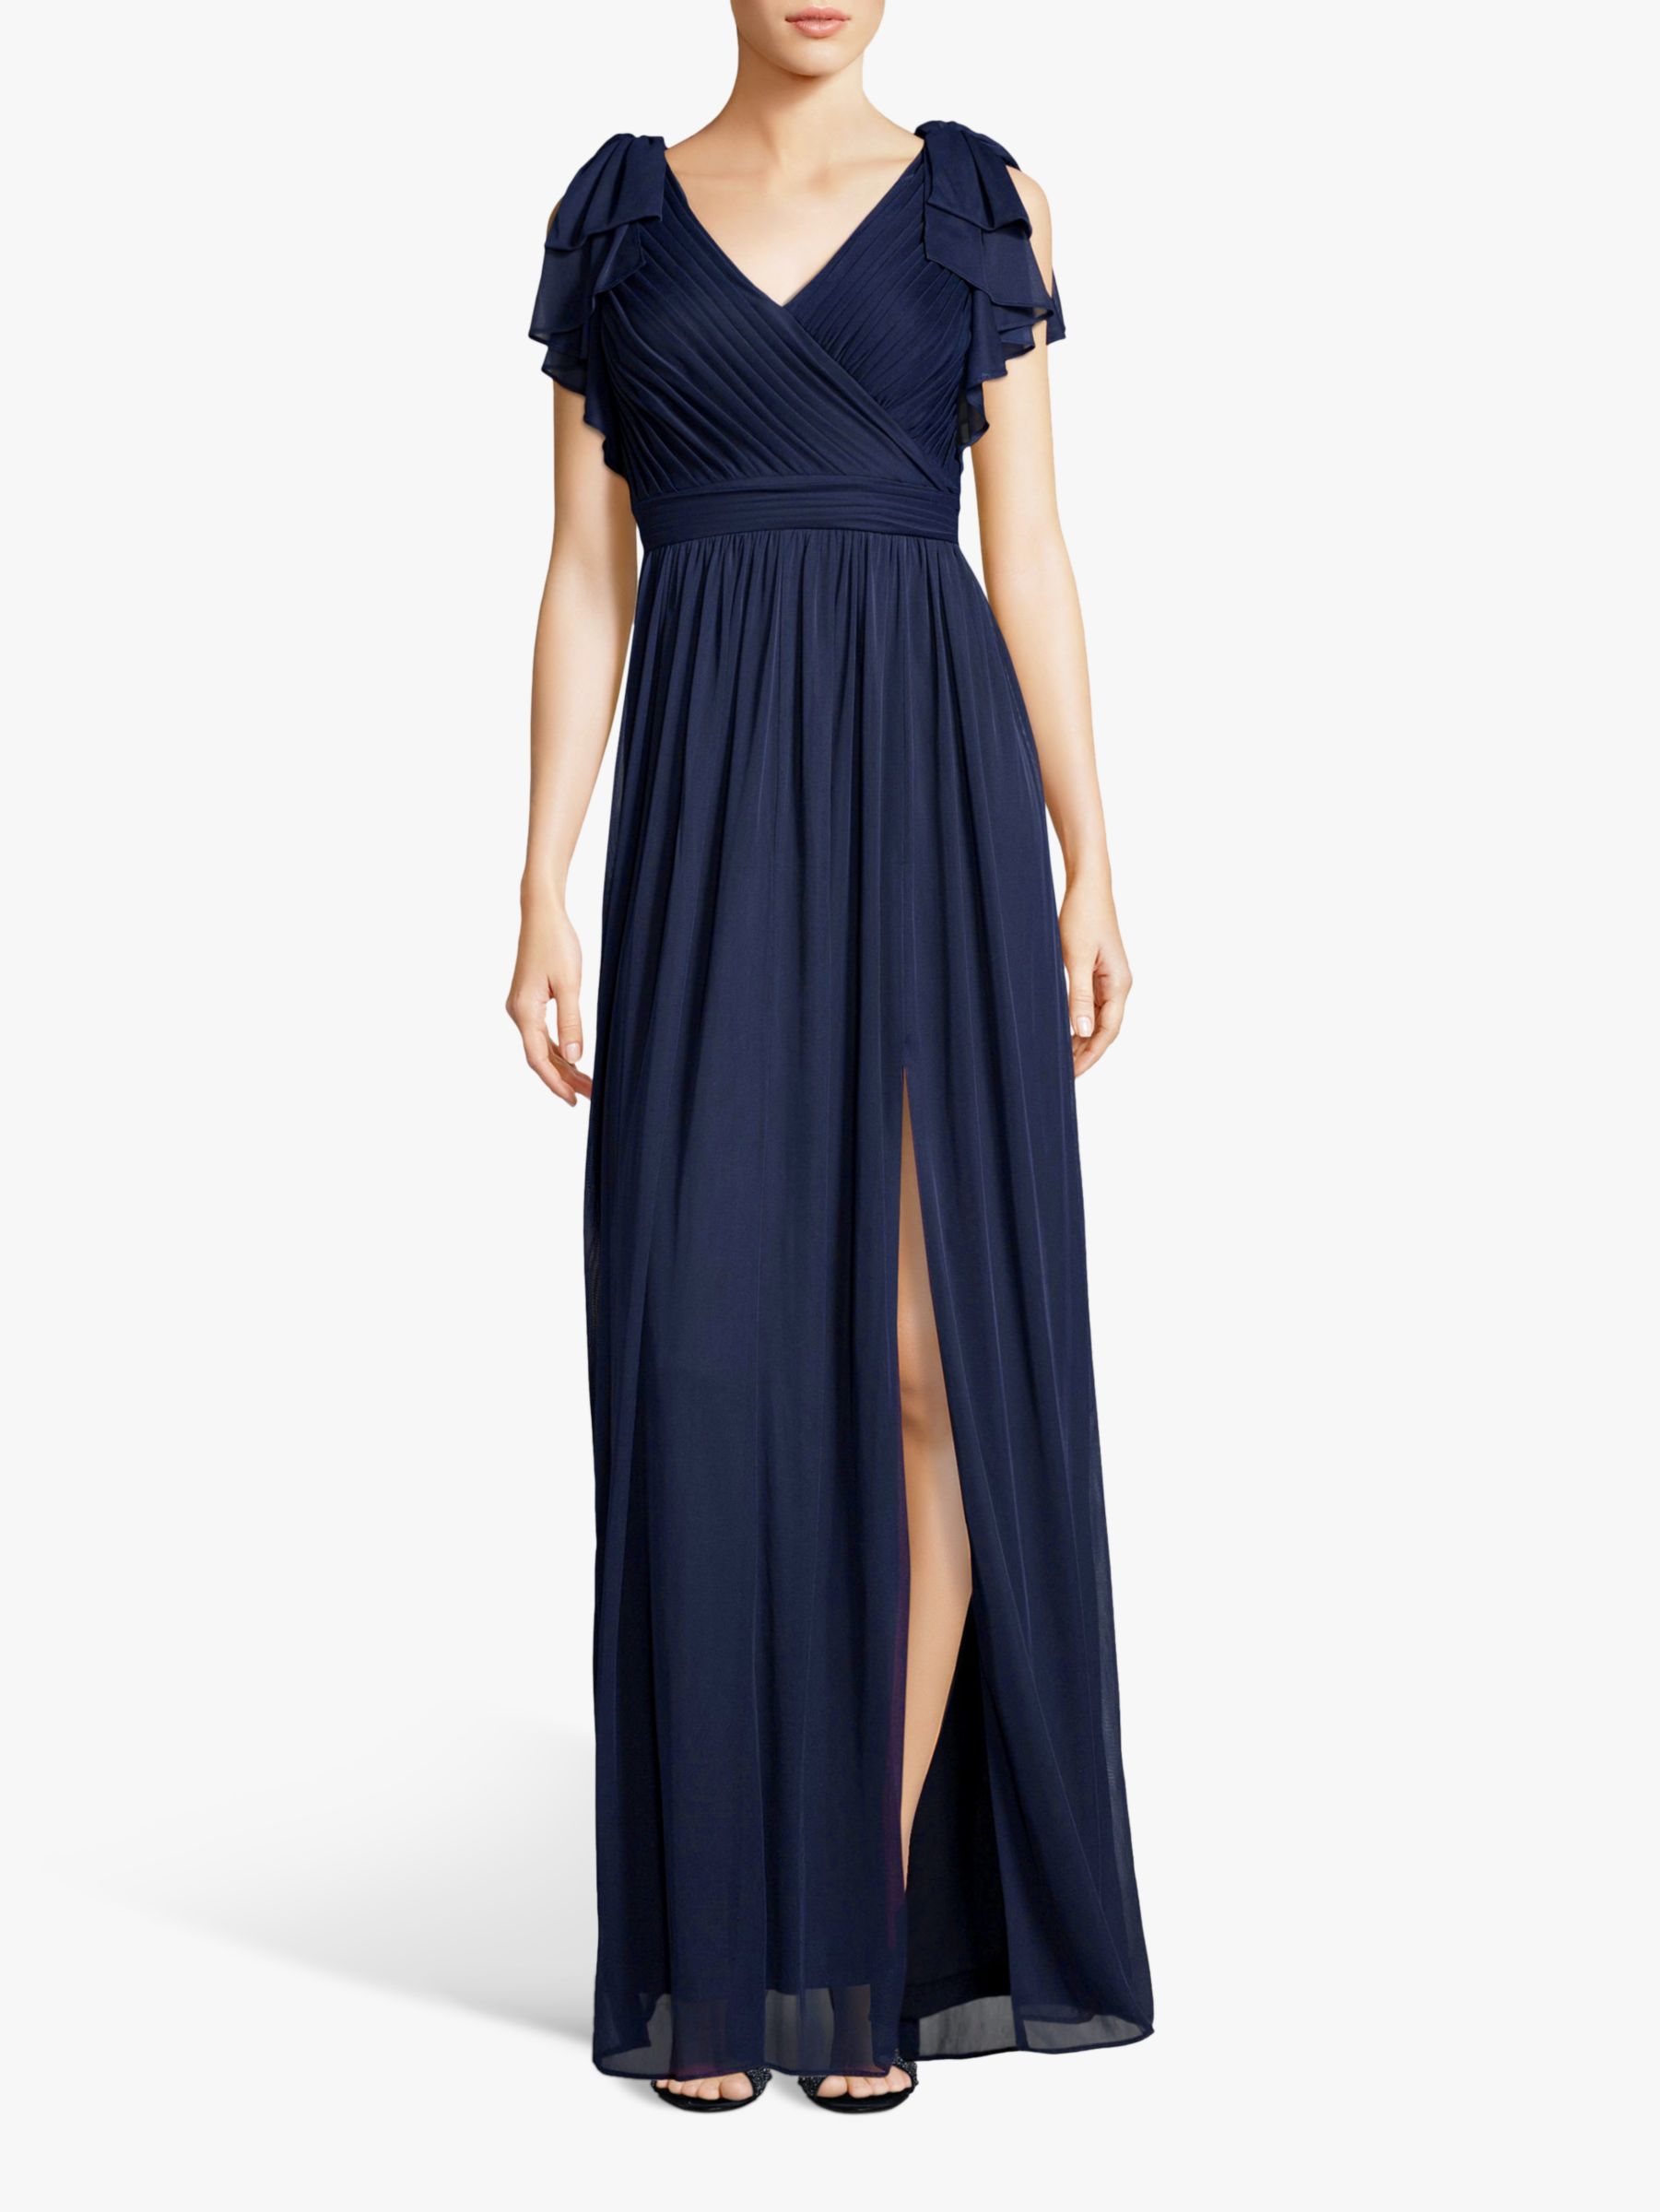 Adrianna Papell Bow Detail Grecian Dress, Midnight